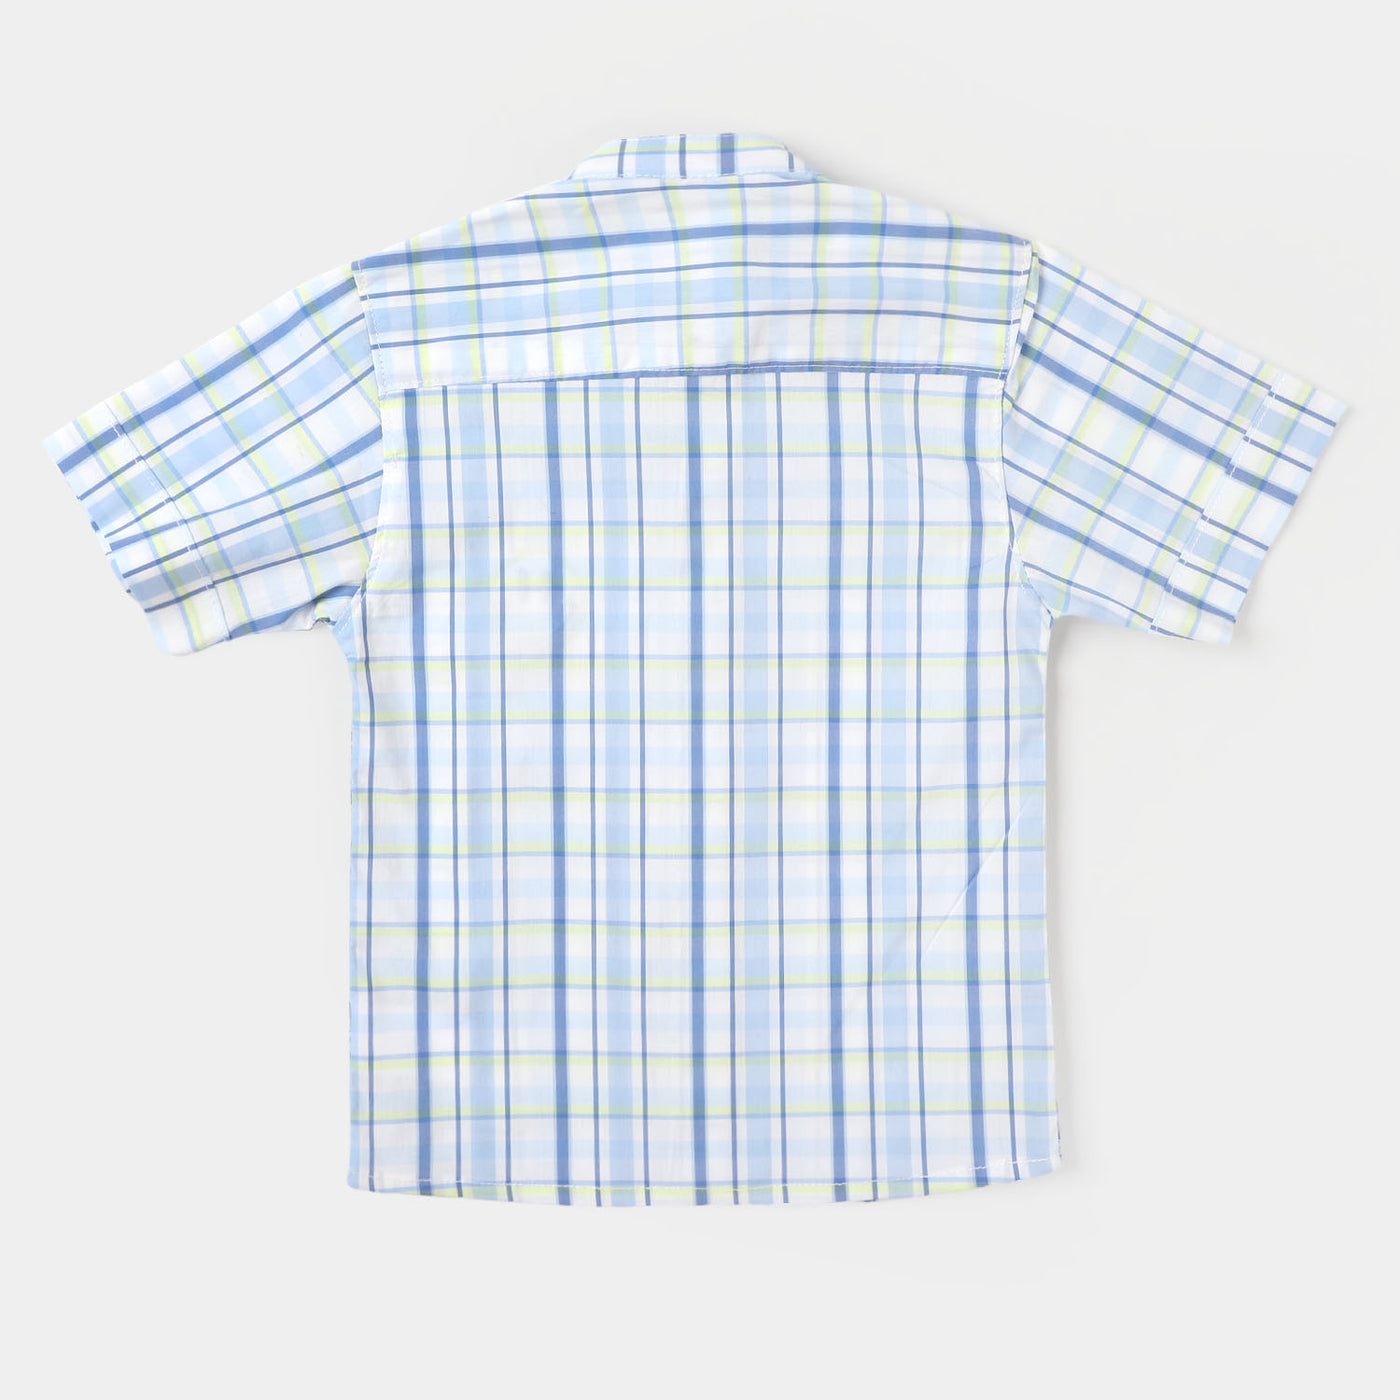 Infant Boys Casual Shirt Smiley Striper - Light Blue